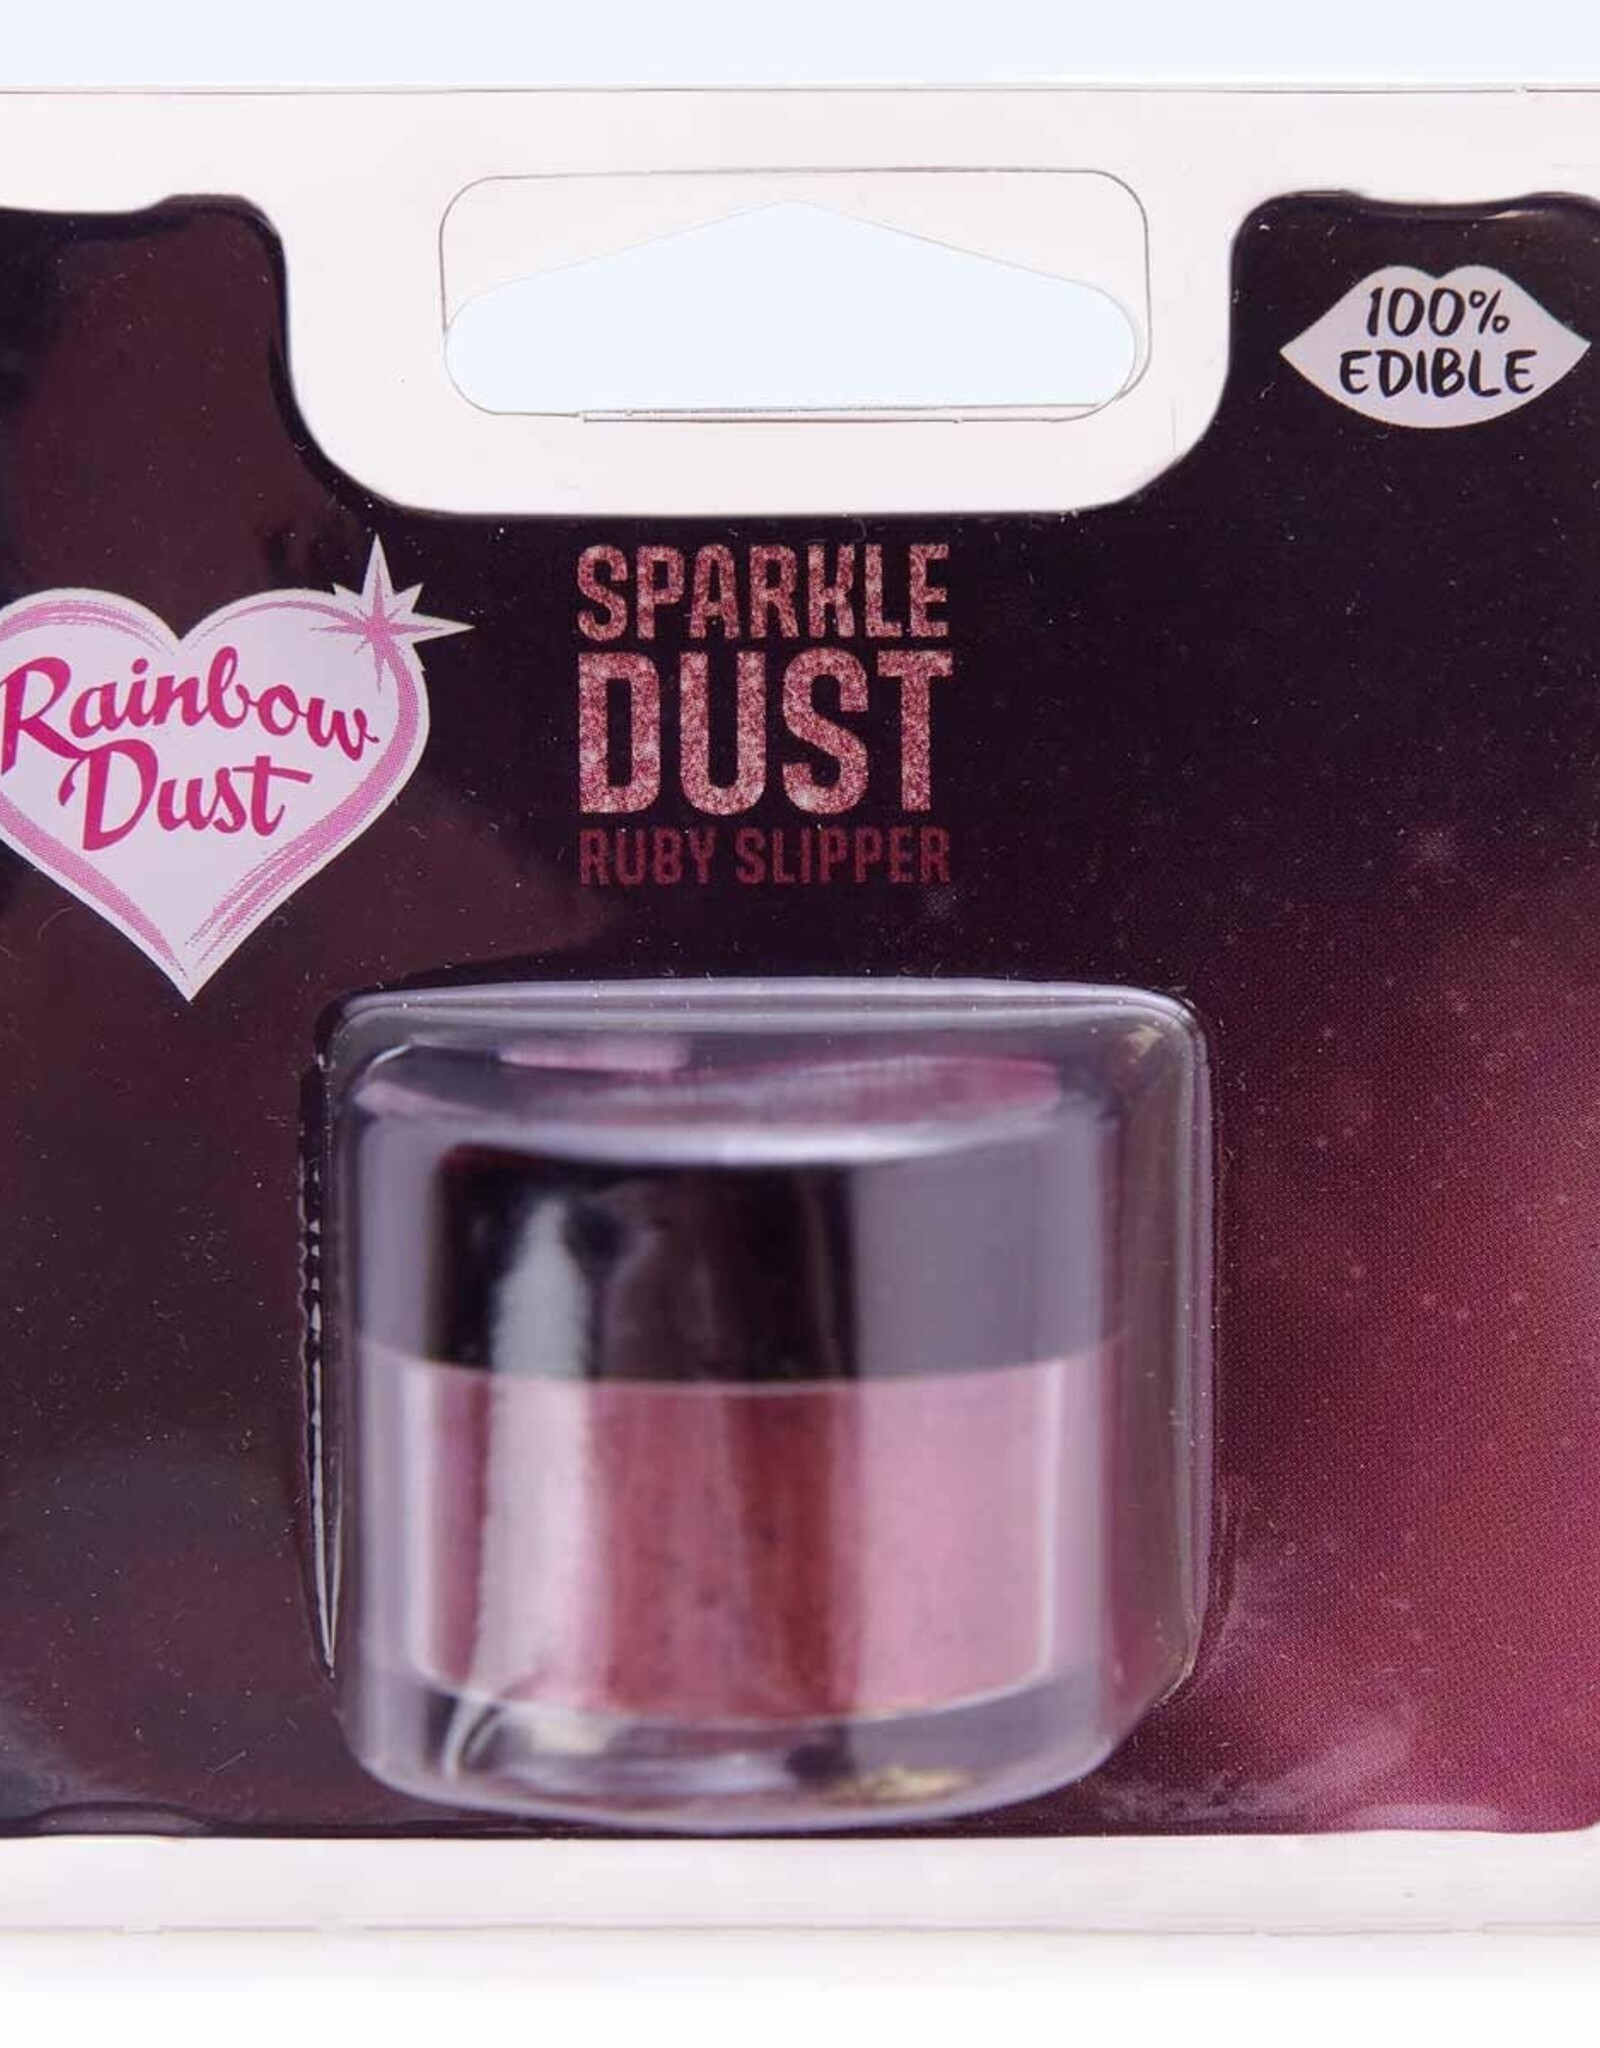 Rainbow Dust Rainbow Dust Eetbaar Glanspoeder (Lustre) Sparkle Ruby Slipper